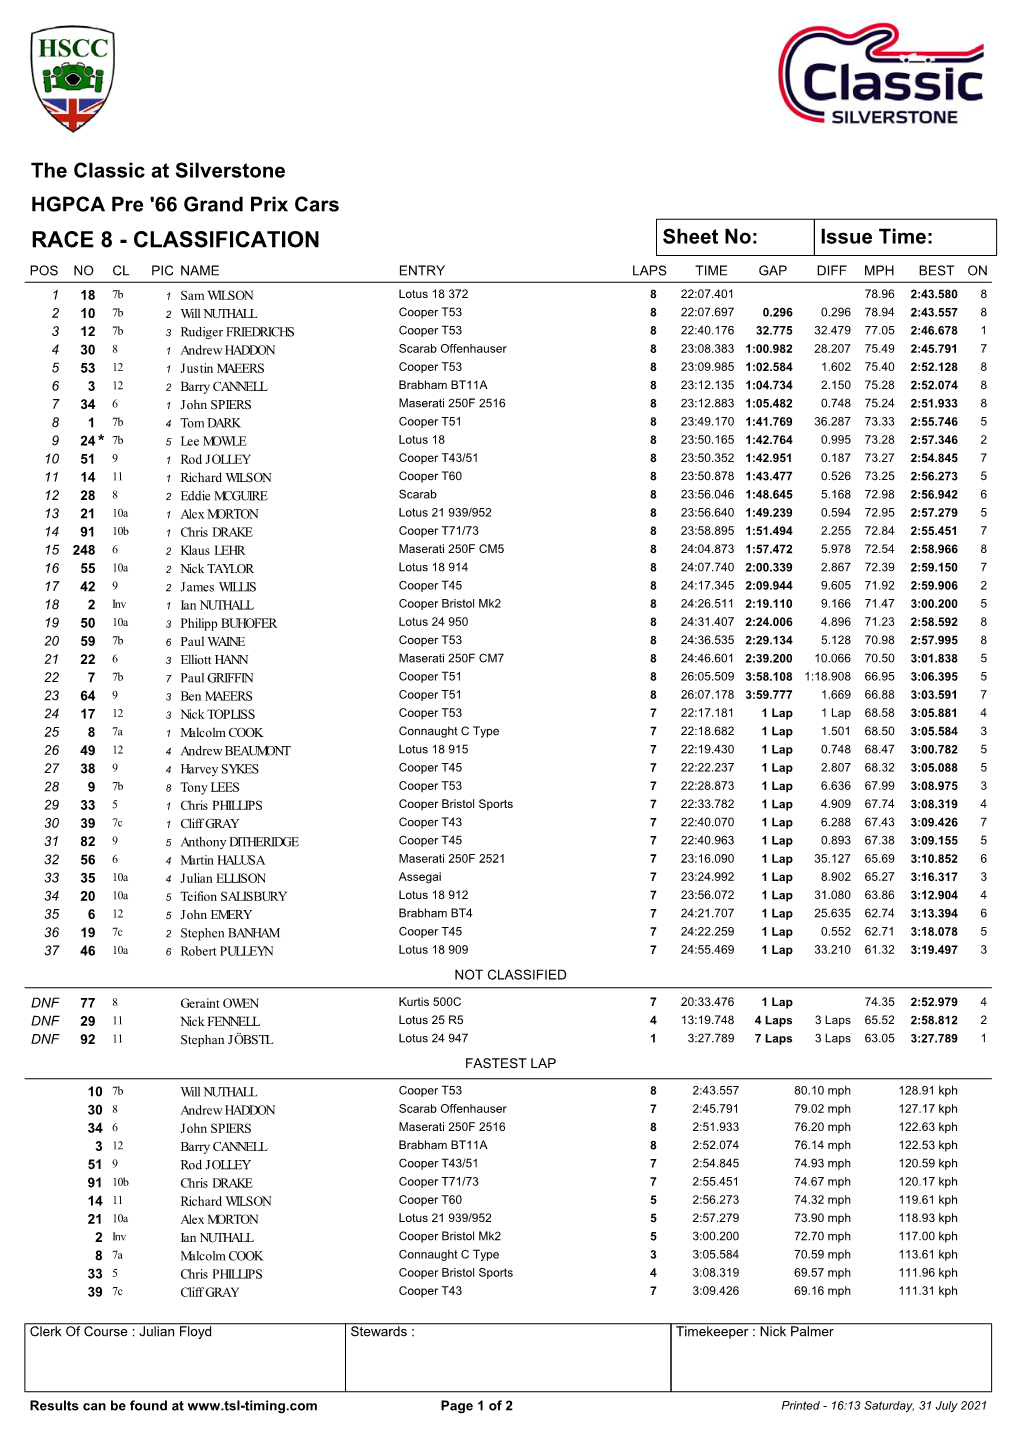 HGPCA Race 8 Classification